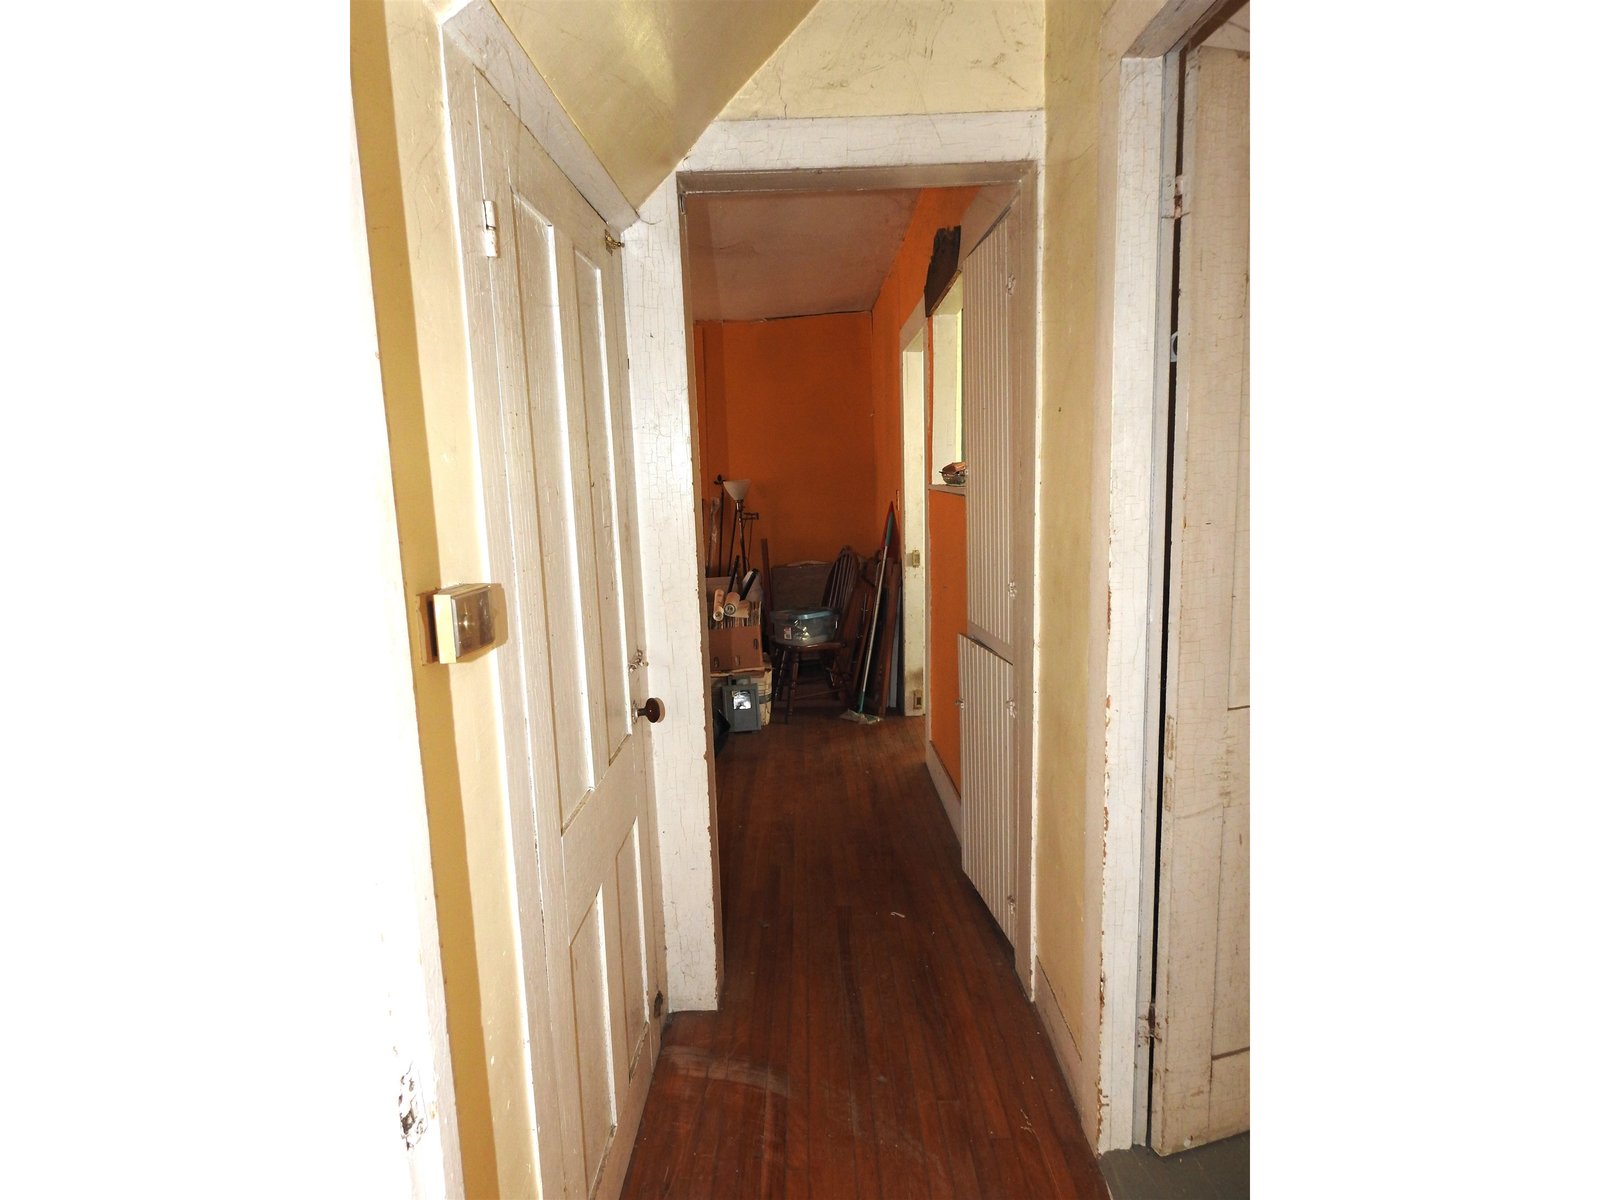 Rear Hallway- Basement on left with Bathroom on right